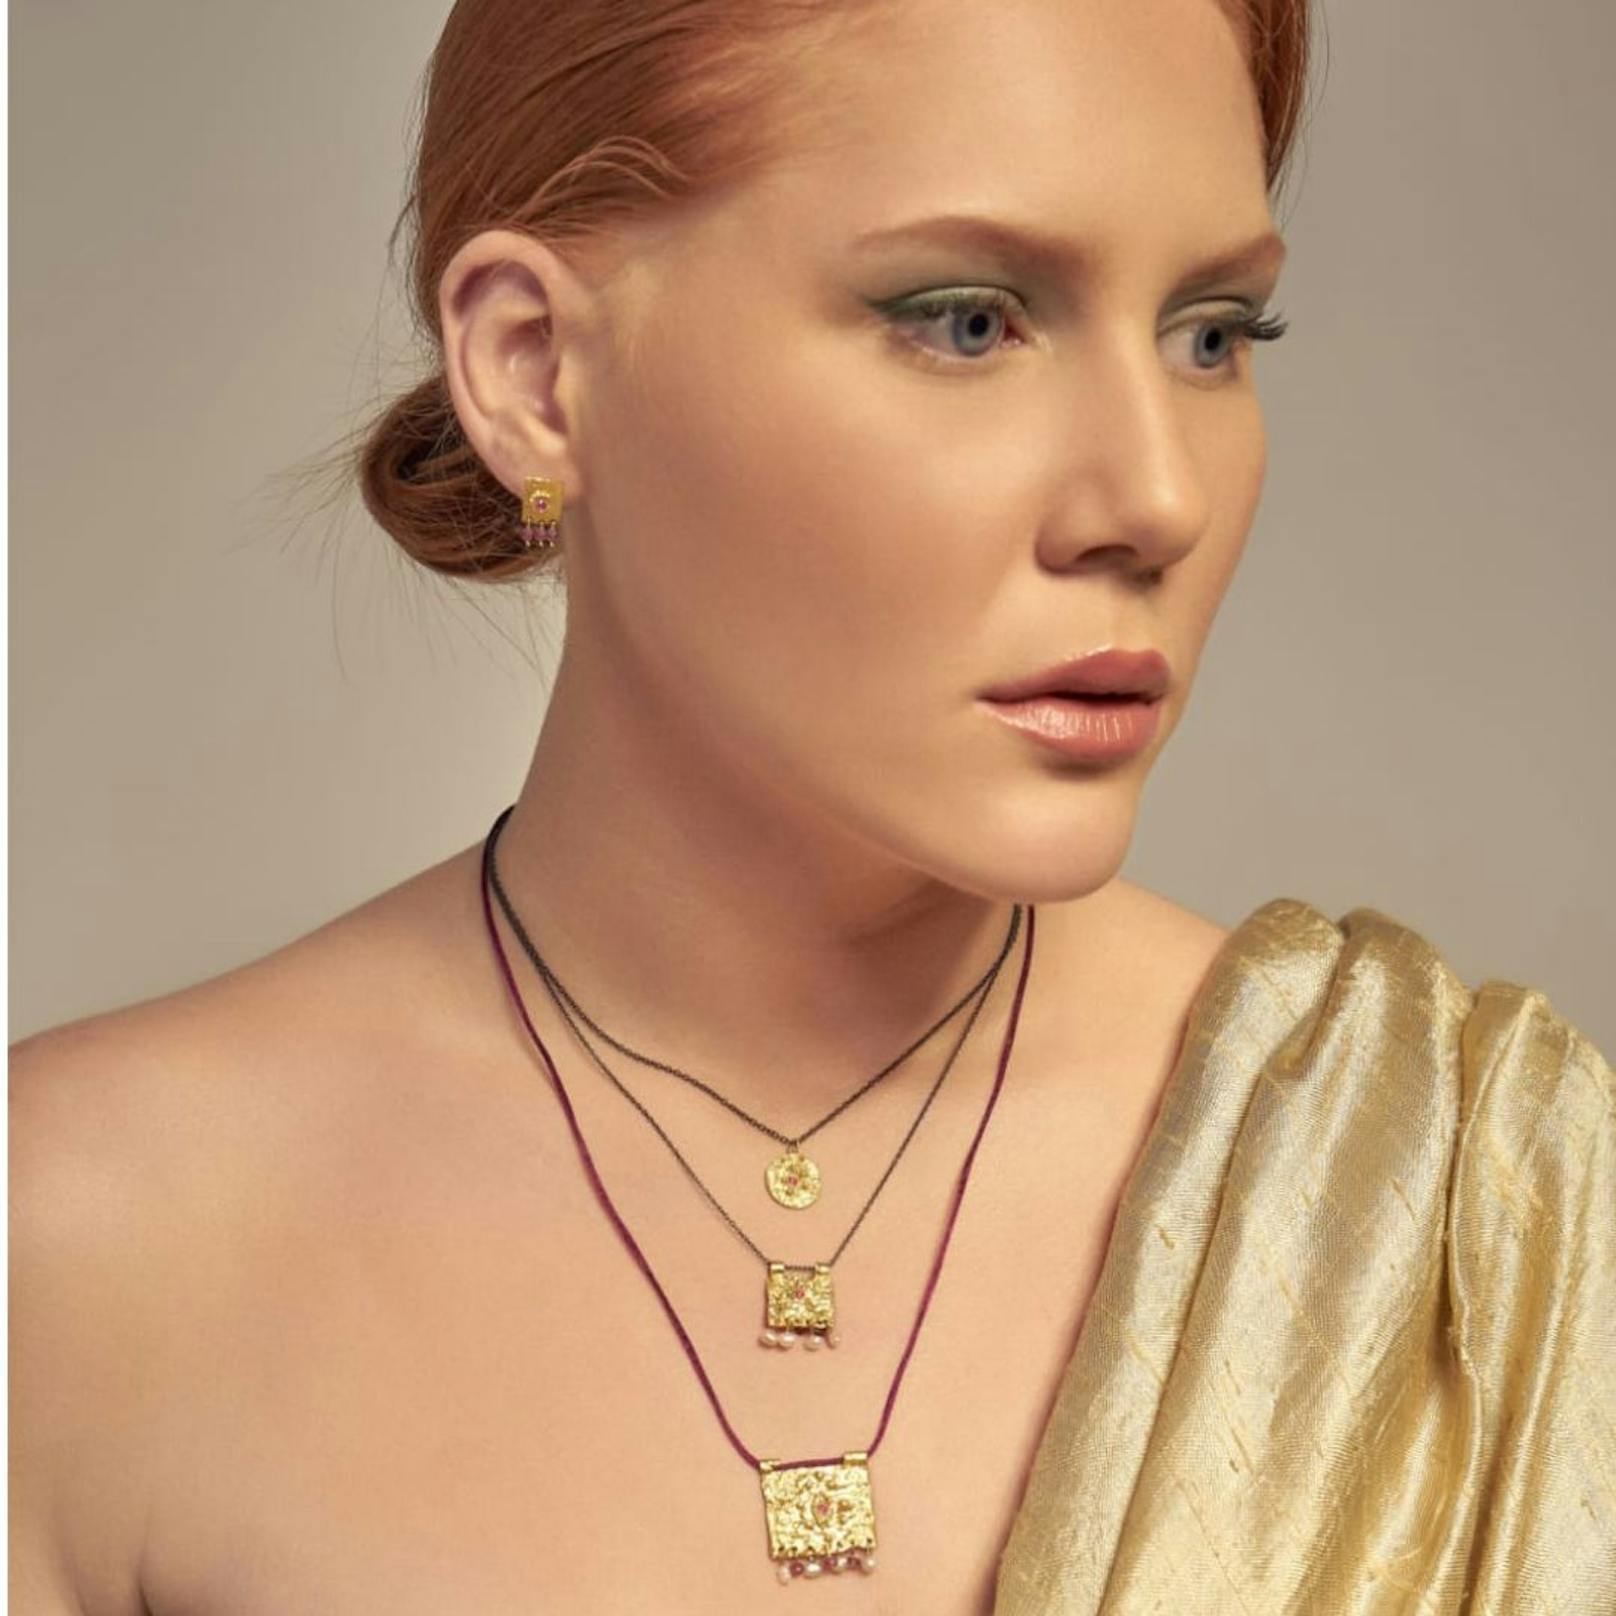 Elif-Dogan-Jewelry bietet fairen Schmuck.&nbsp;